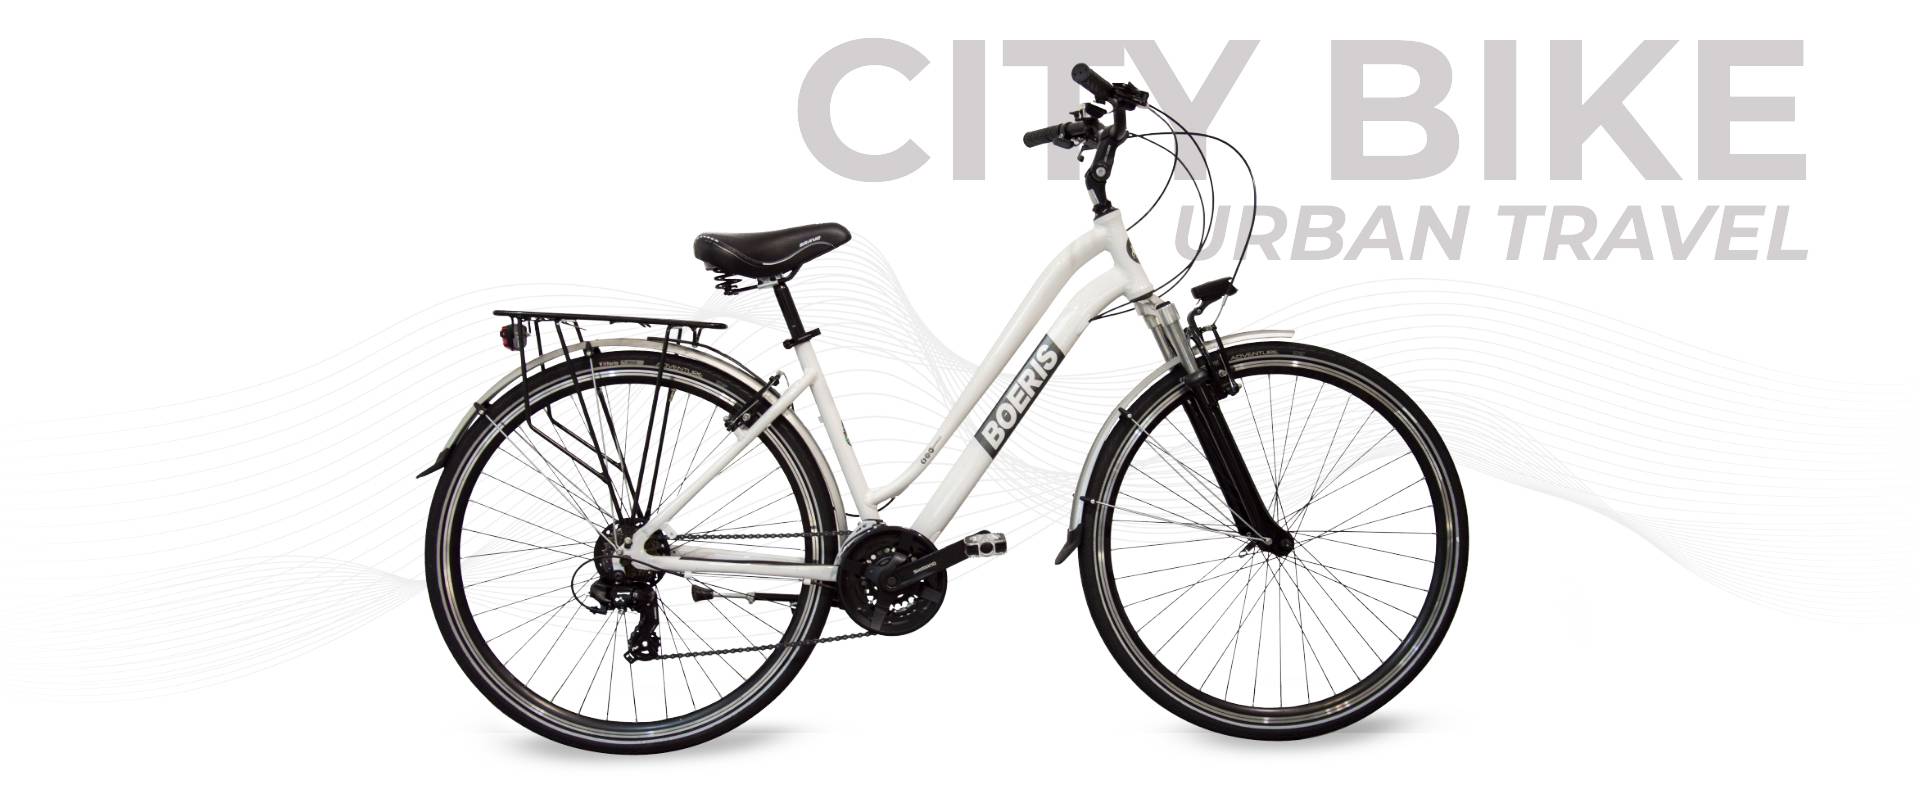 City bike urban travel Boeris Bikes Torino colore bianco